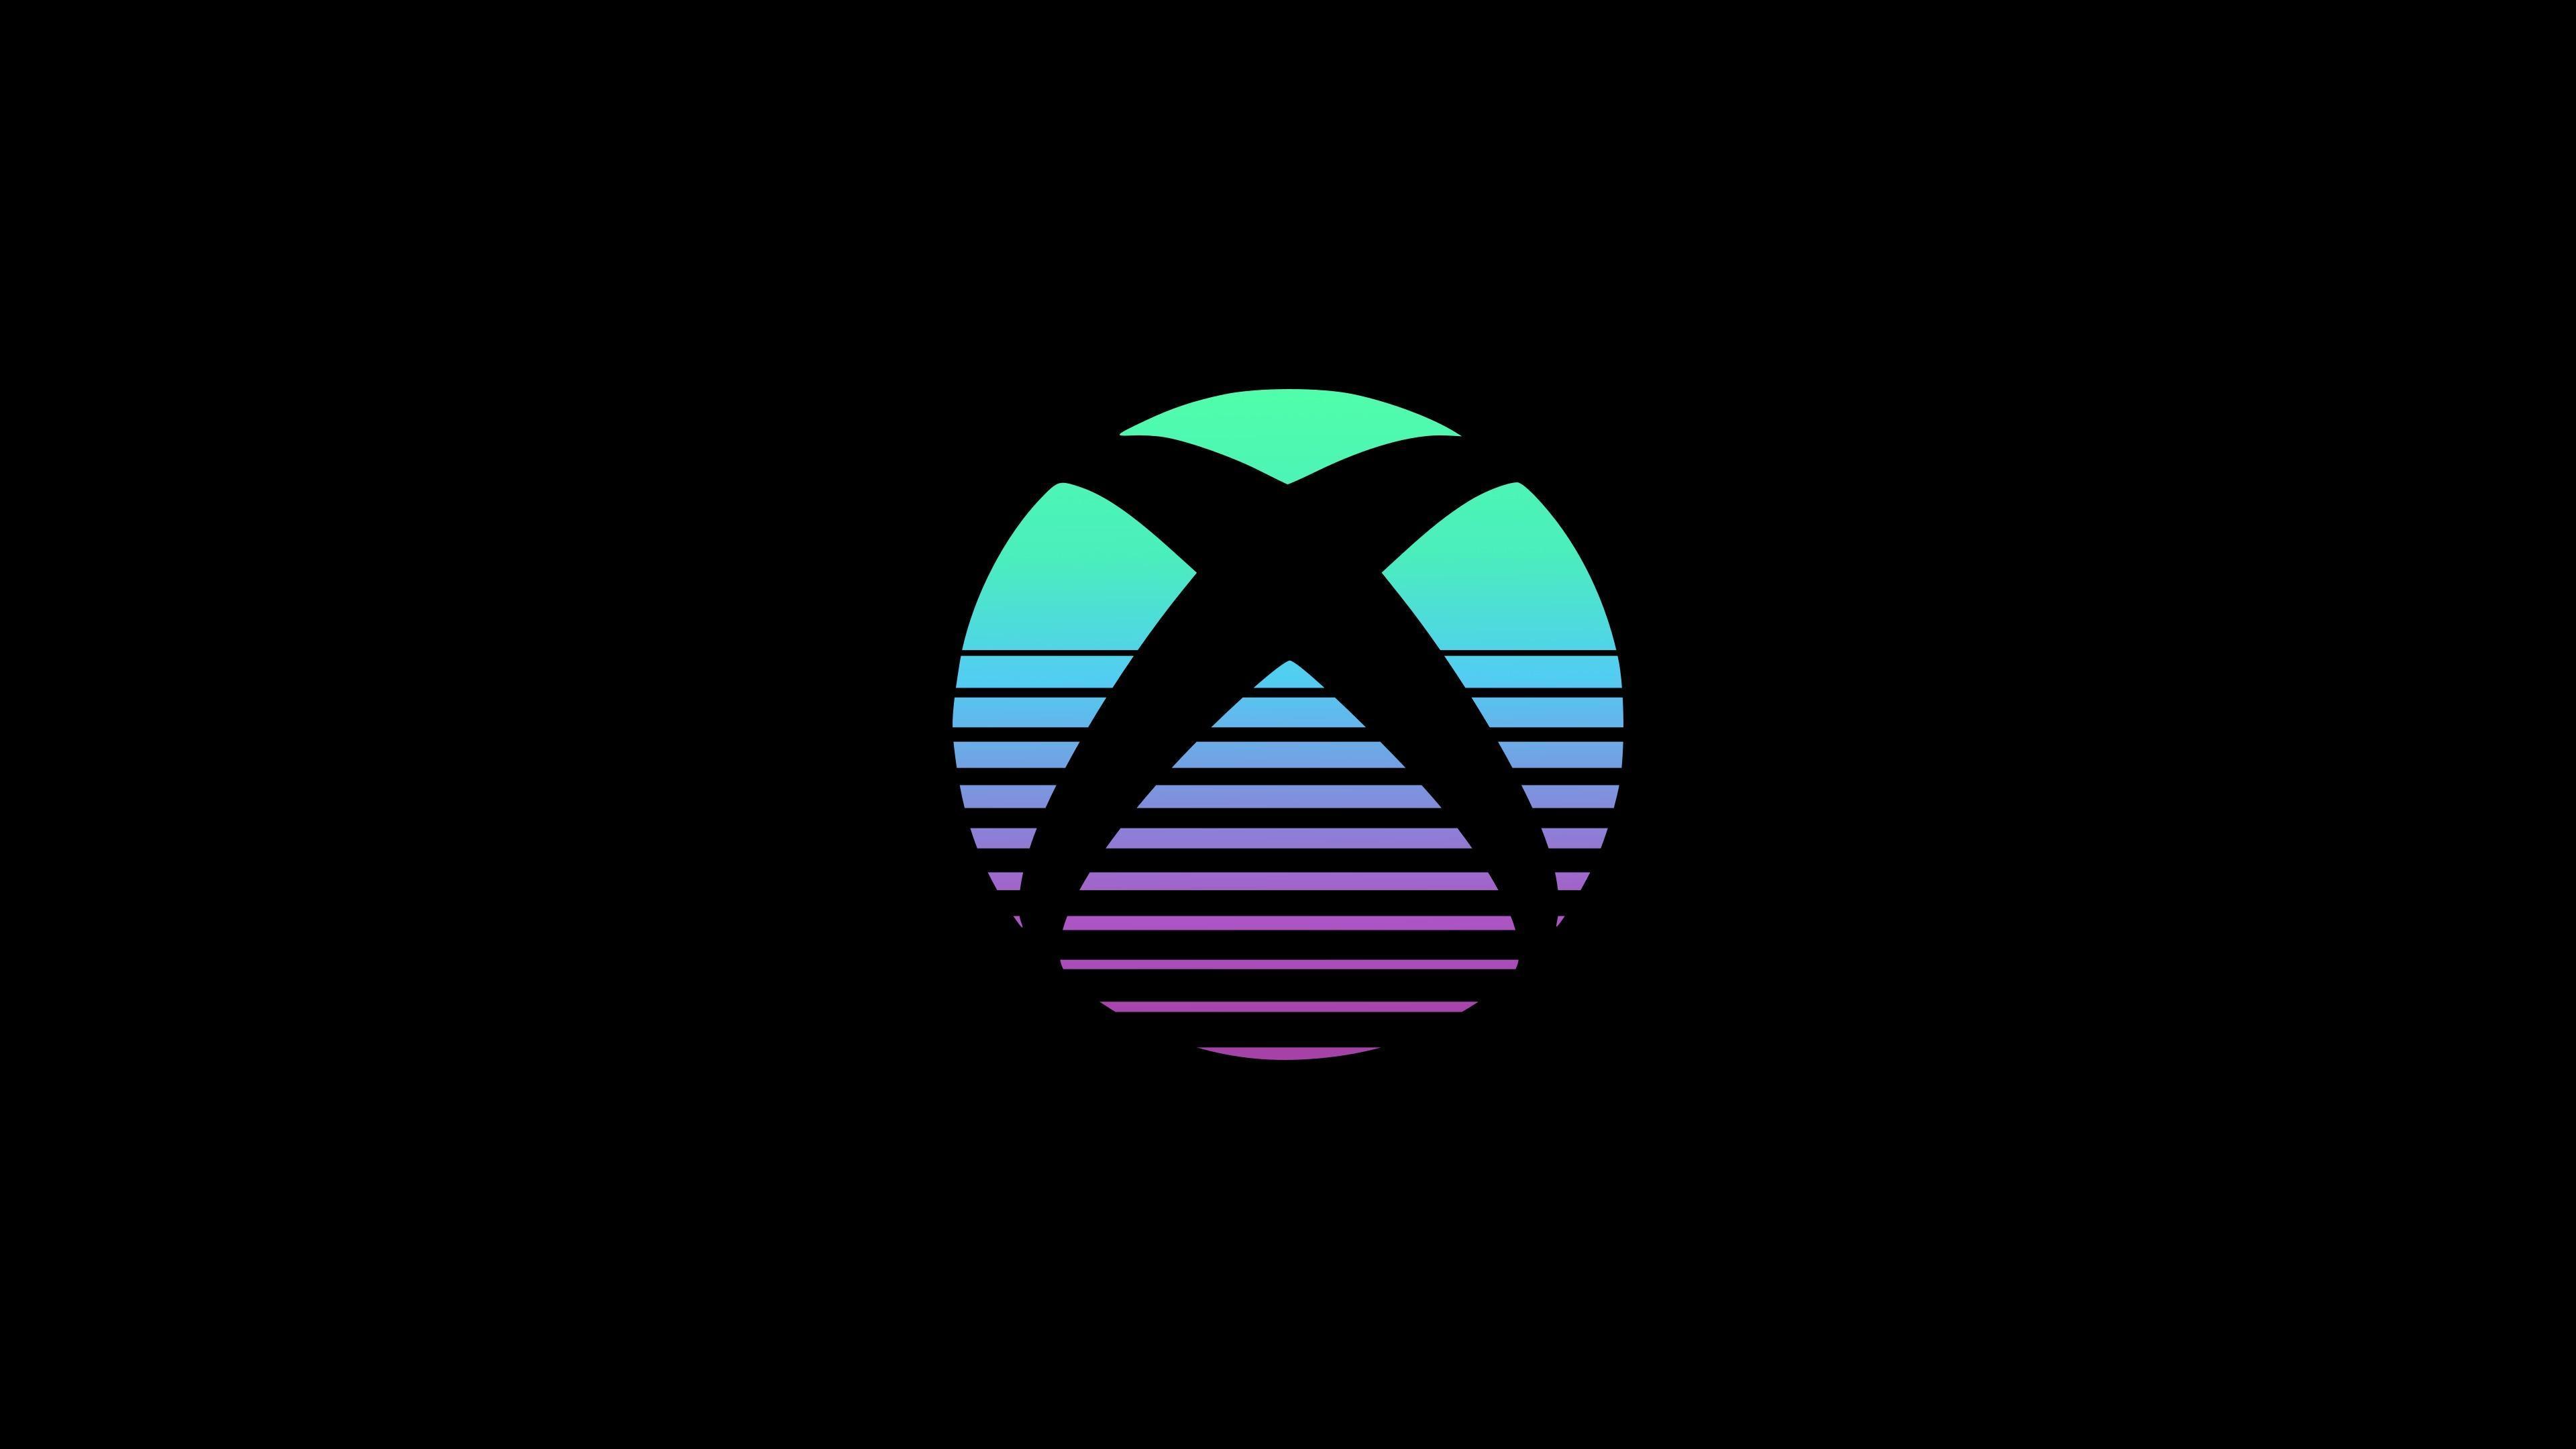 HD wallpaper, Xbox, Digital Art, Logo, 4K, Background, Black